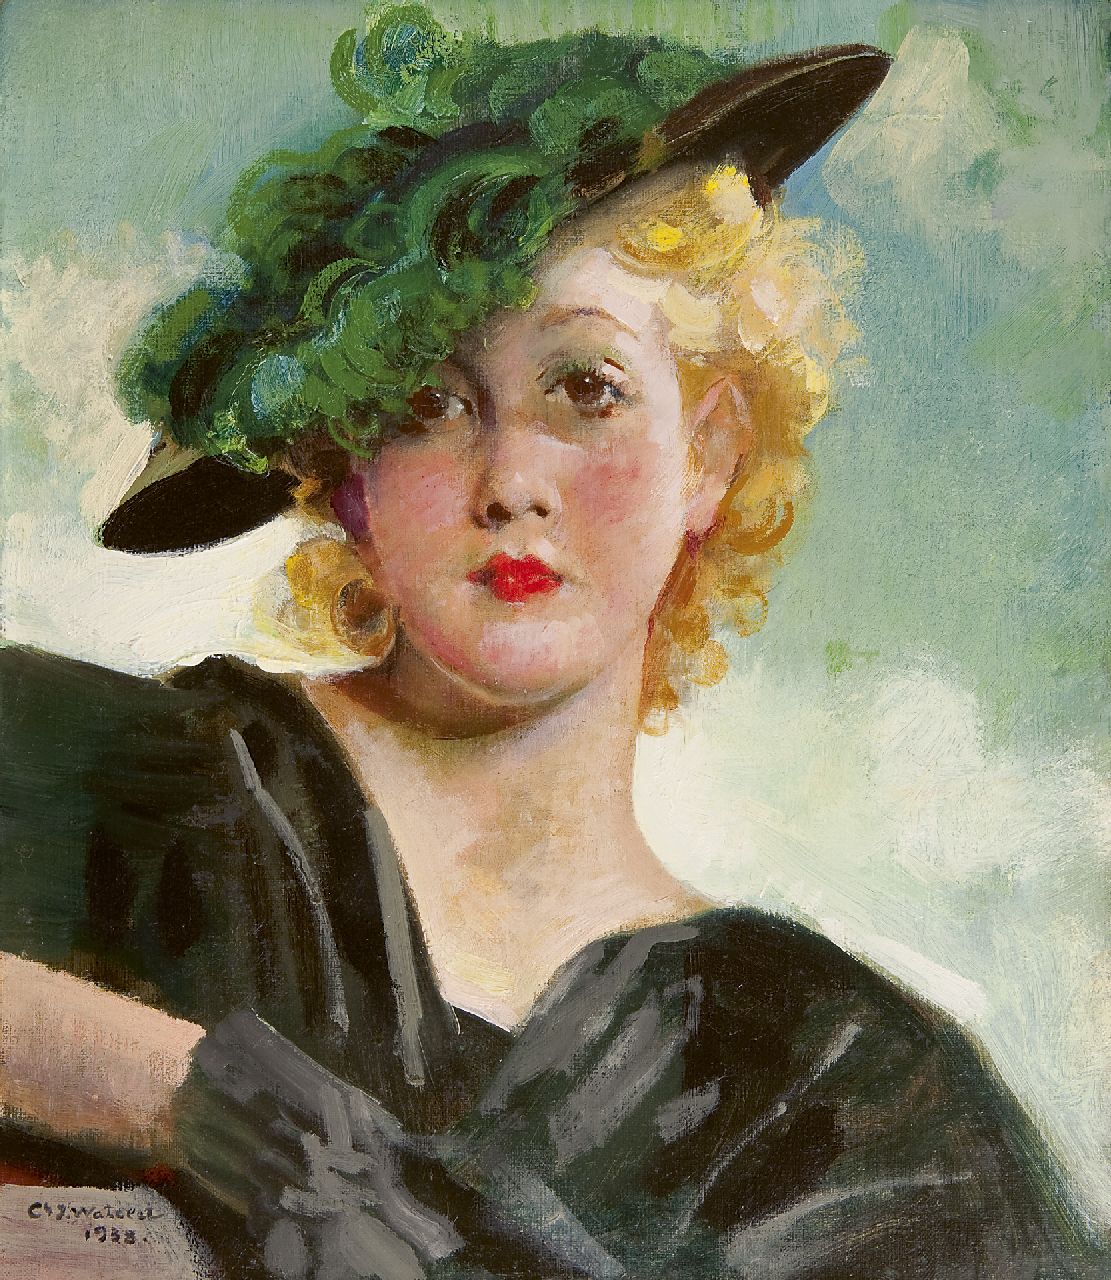 Watelet C.J.  | 'Charles' Joseph Watelet, Lady with green hat, Öl auf Leinwand 40,1 x 34,9 cm, signed l.l. und dated 1938